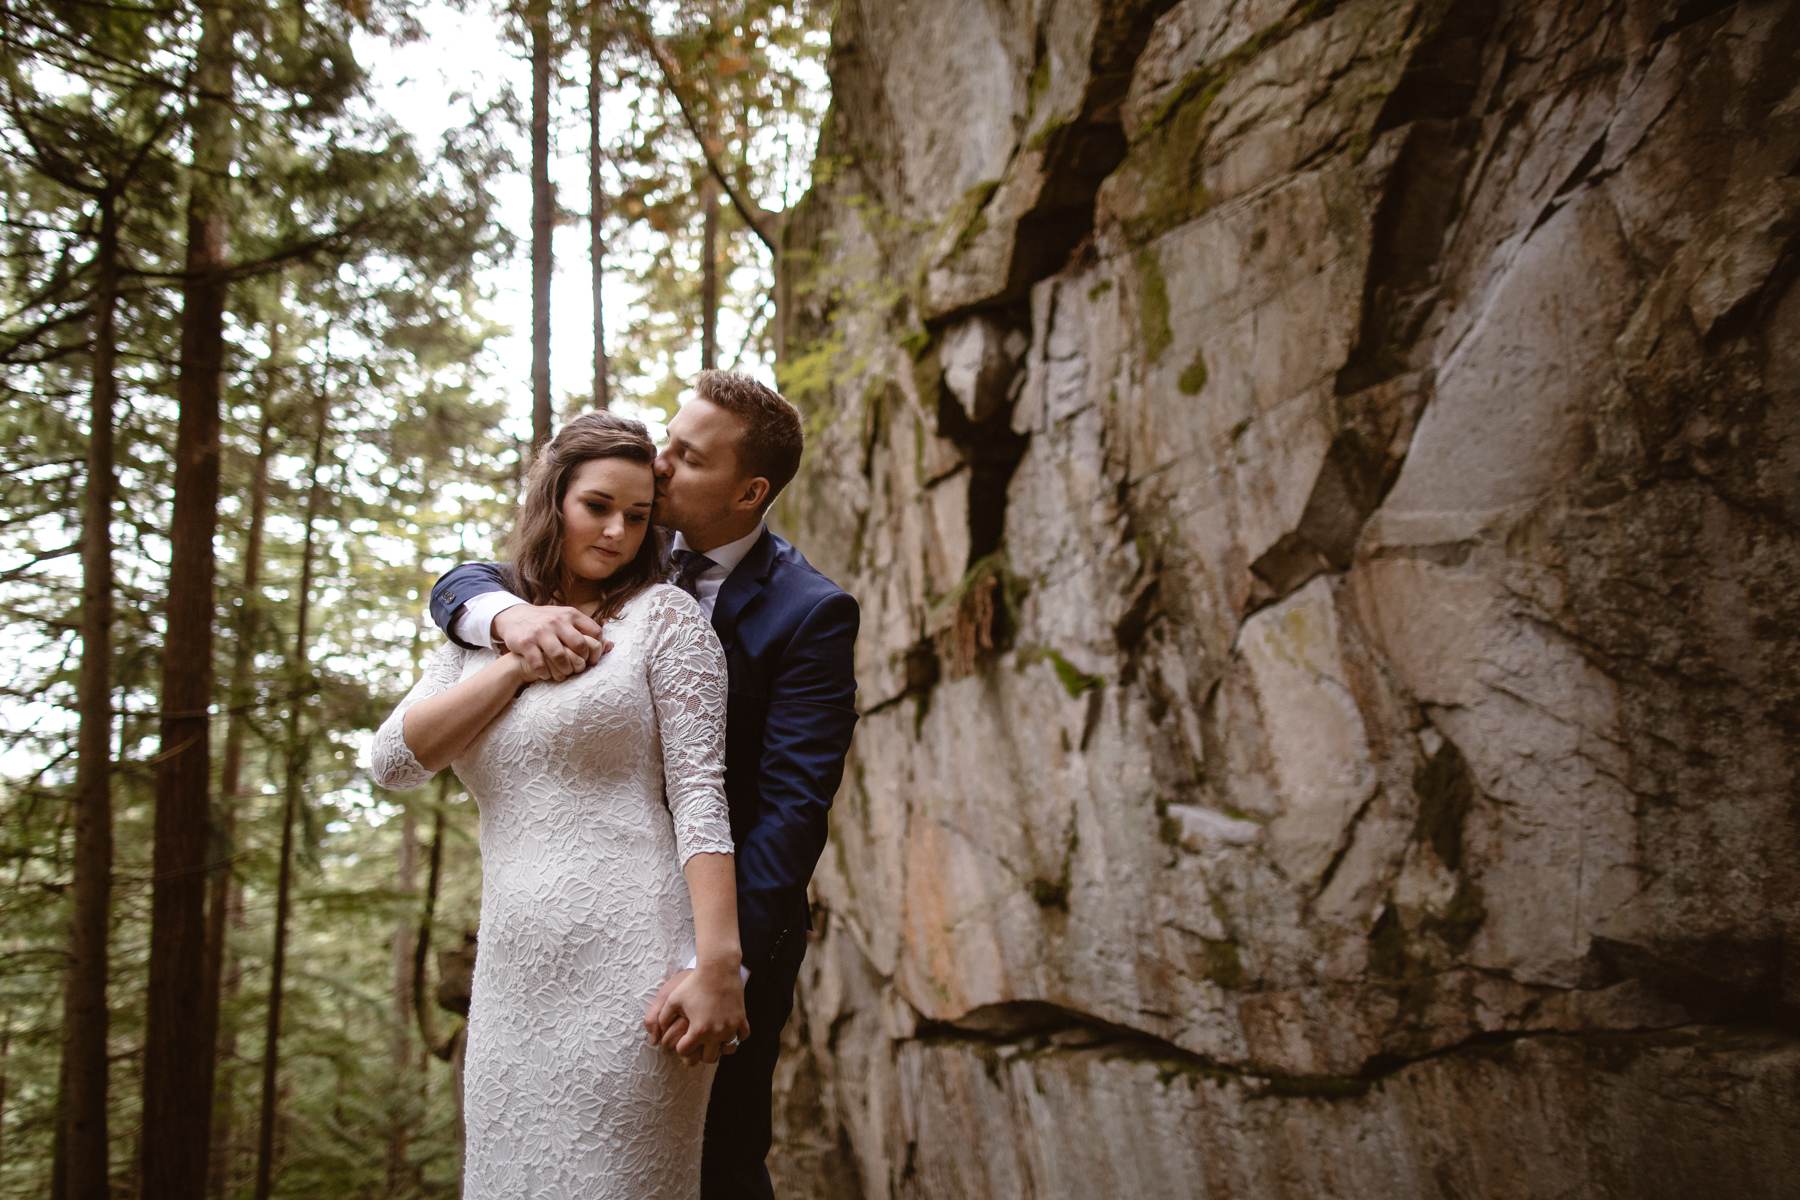 Squamish Wedding Photographers at an Adventurous Elopement - Image 32